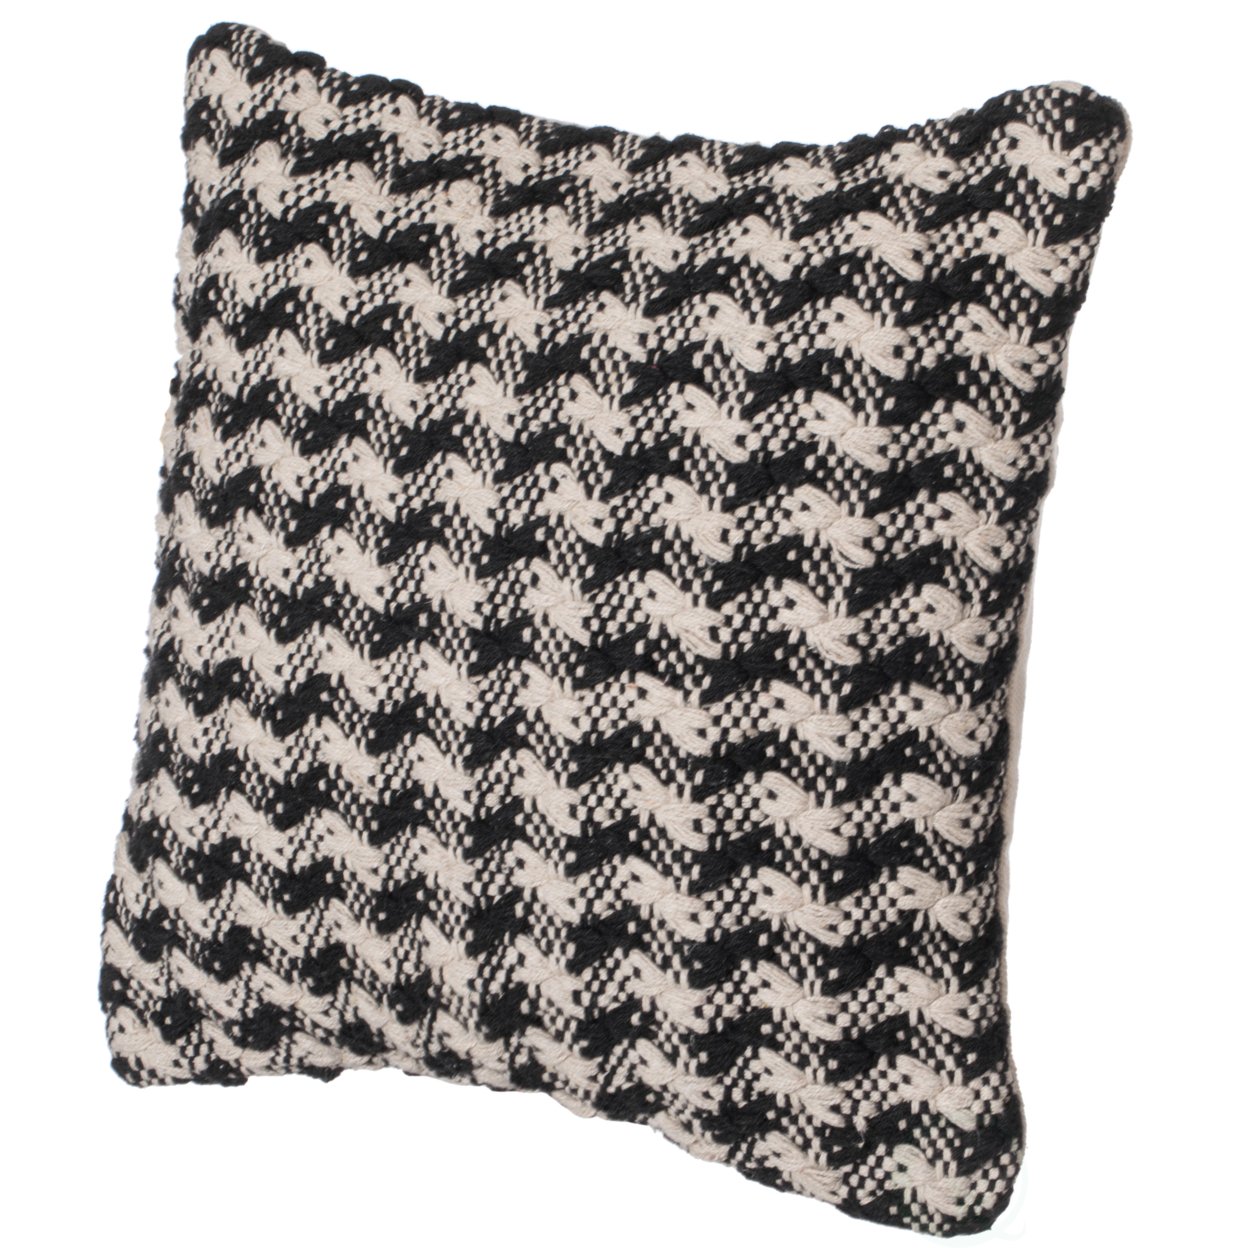 16" Handwoven Cotton Throw Pillow Cover Chevron & Gingham Design Black & White - chevron with cushion